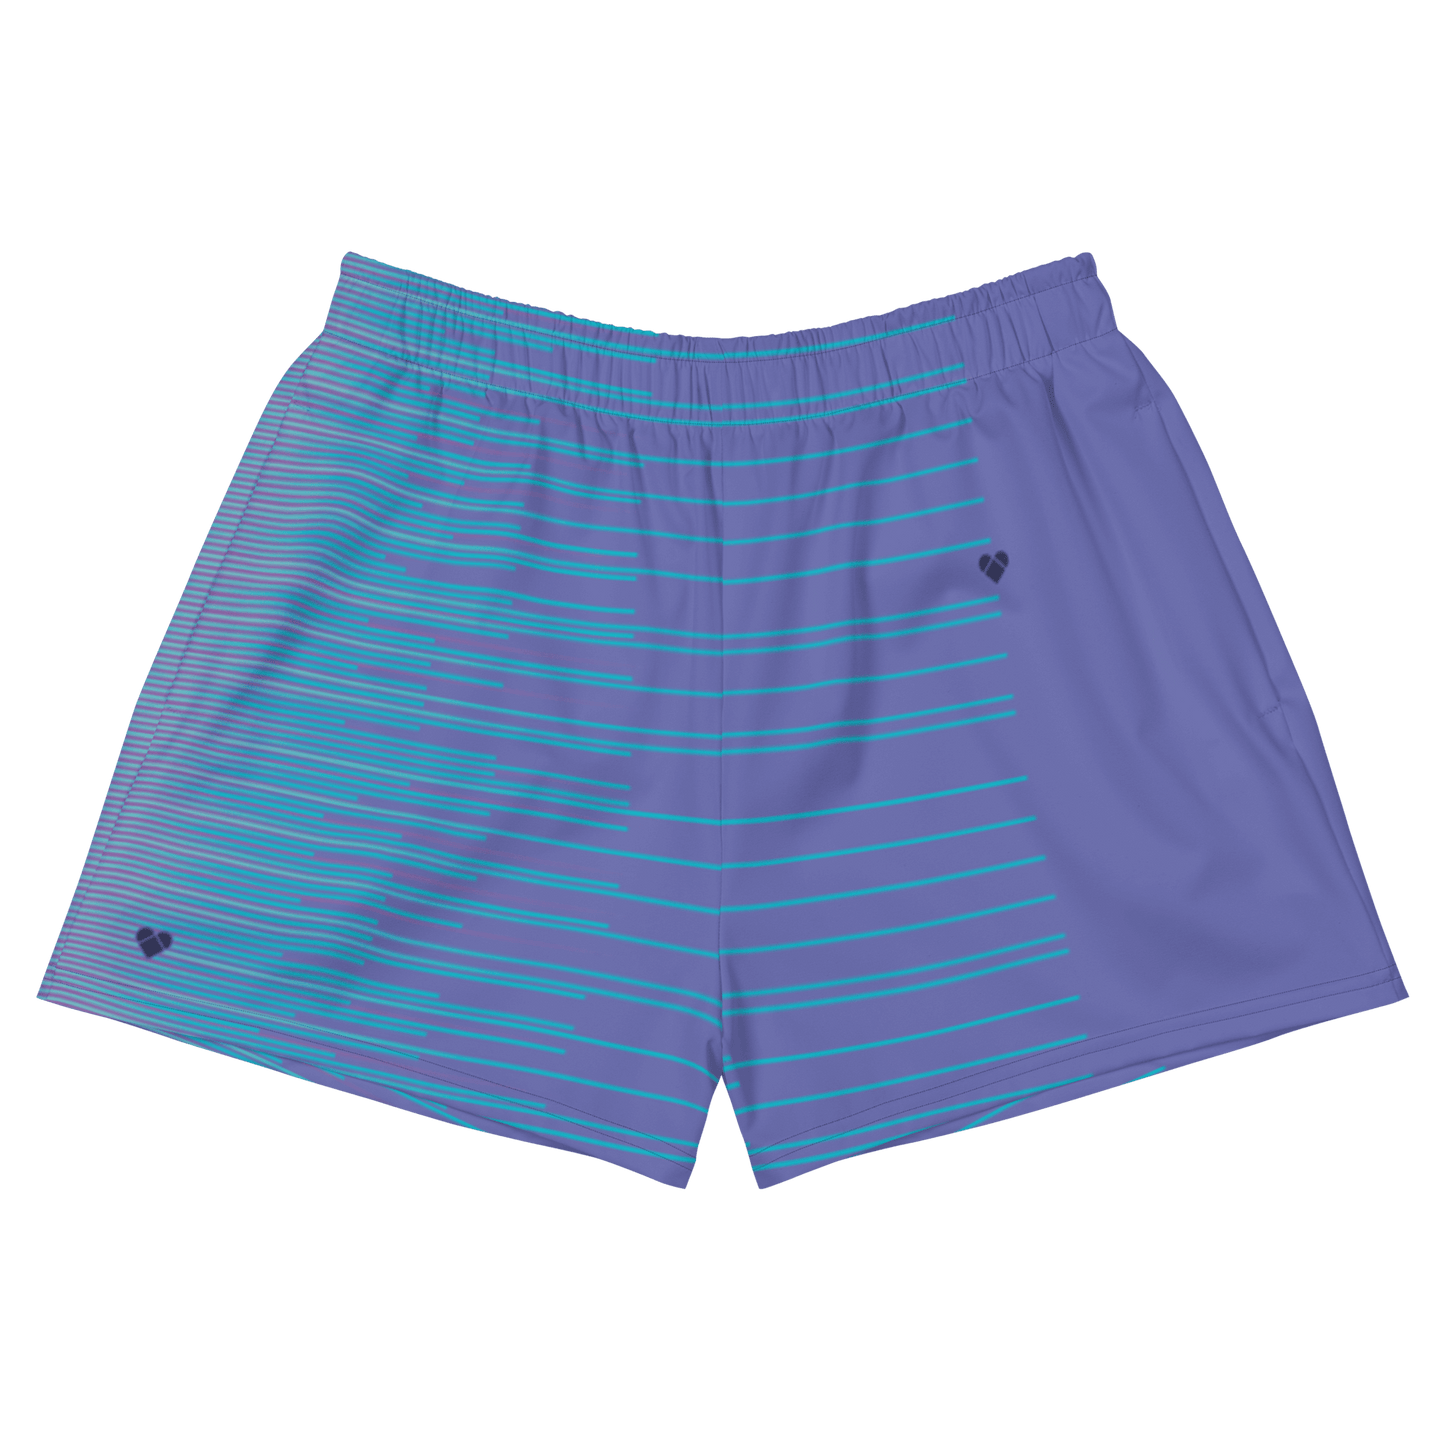 Periwinkle Stripes Dual Sport Shorts - A Sporty Fashion Statement by CRiZ AMOR